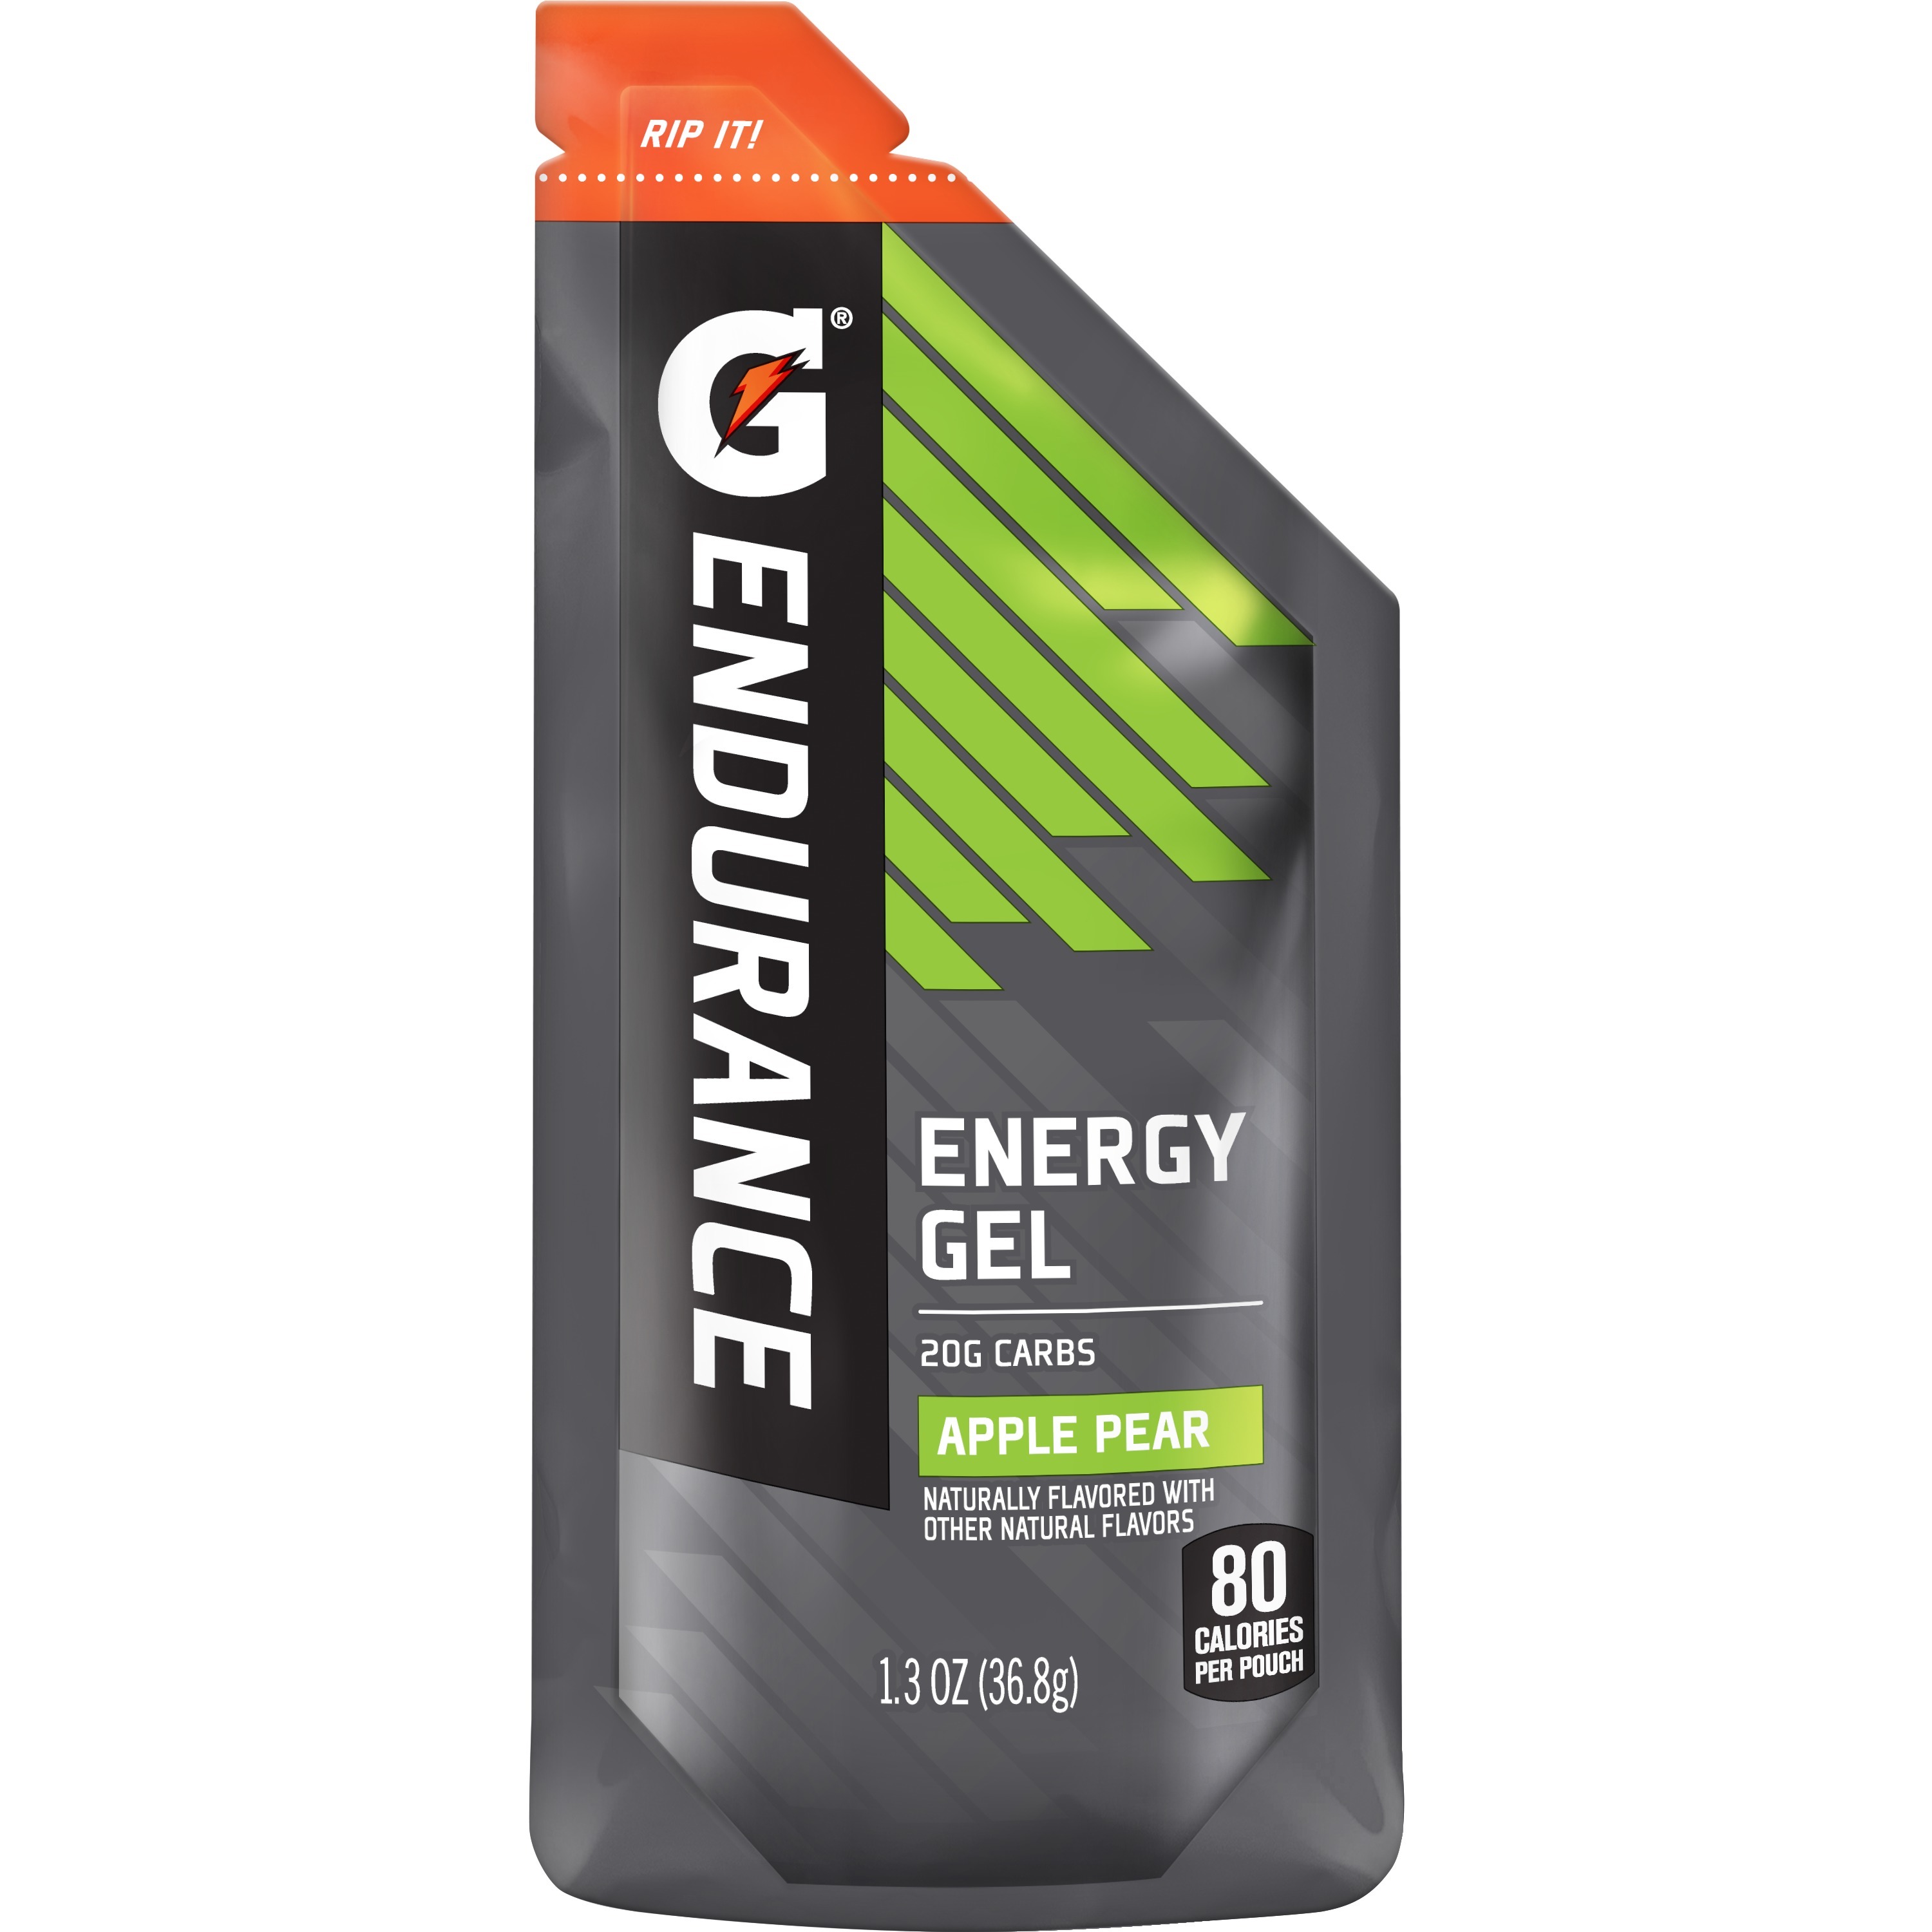 Gatorade, Endurance, Apple Pear Flavored, Energy Gel - SmartLabel™